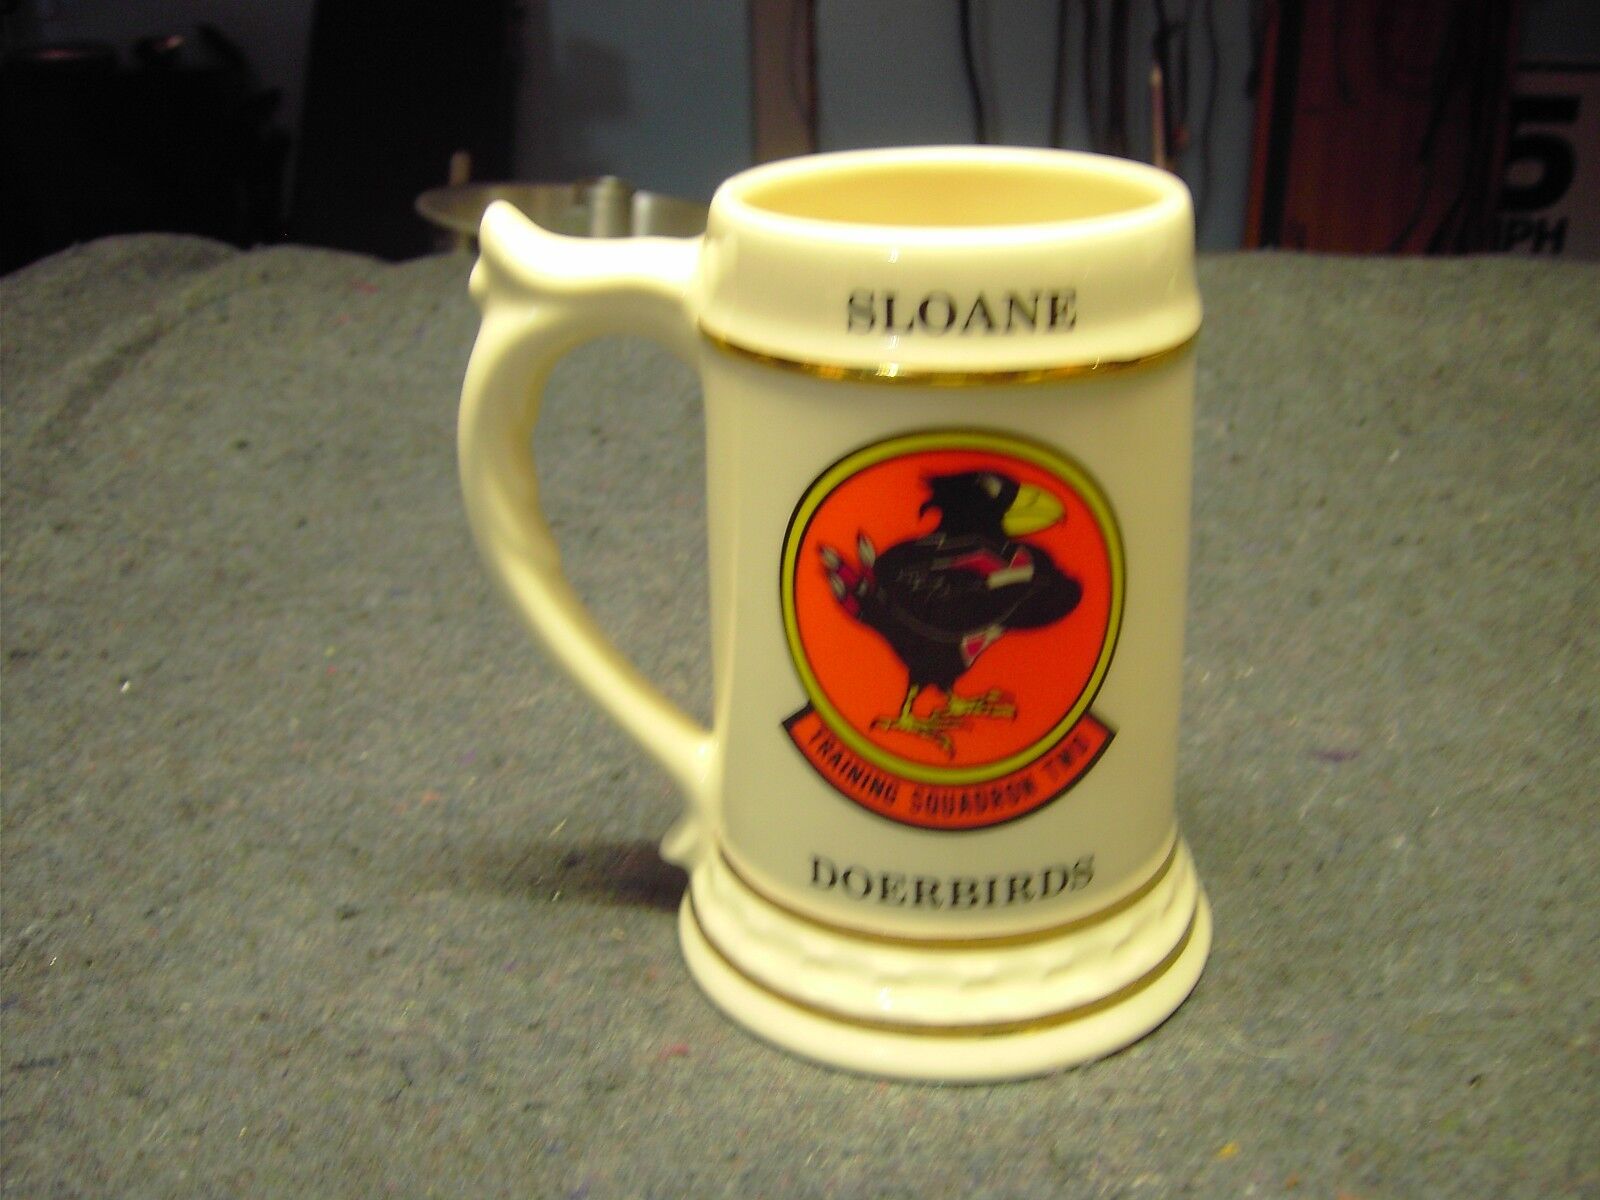 TRAINING SQUADRON TWO DOER BIRDS Inscribed SLOANE Beer Mug 24 oz